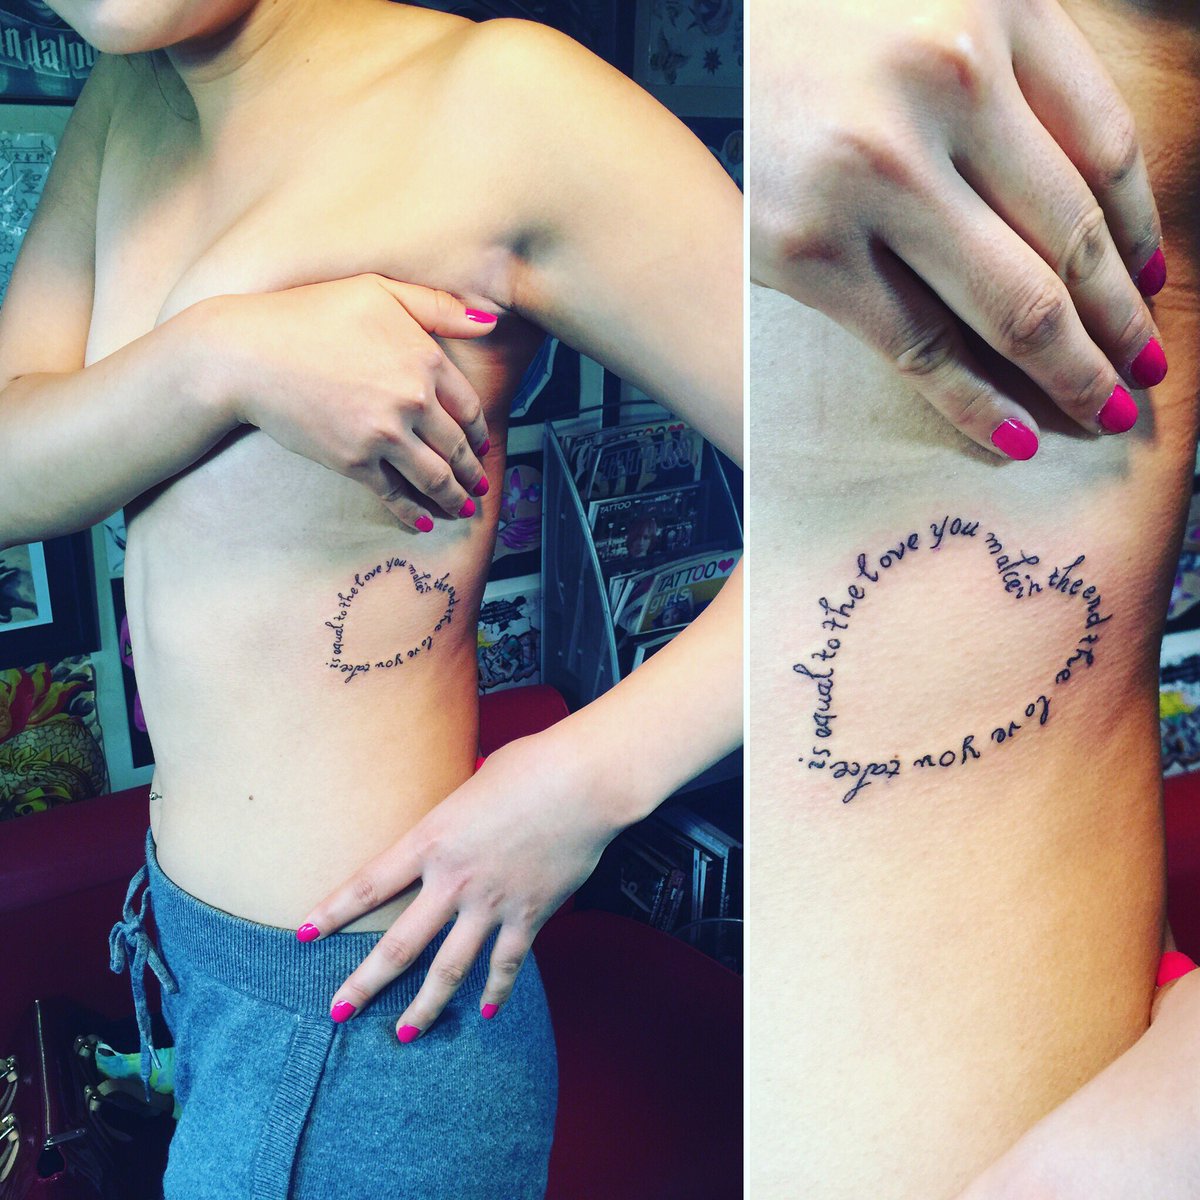 2face Tattoo Studio A Twitter 女の子の脇腹に 型のメッセージ彫りました Tattoo タトゥー好きな人rt タトゥー 刺青 Heart ハート メッセージ ワンポイント 千葉 木更津 聖針